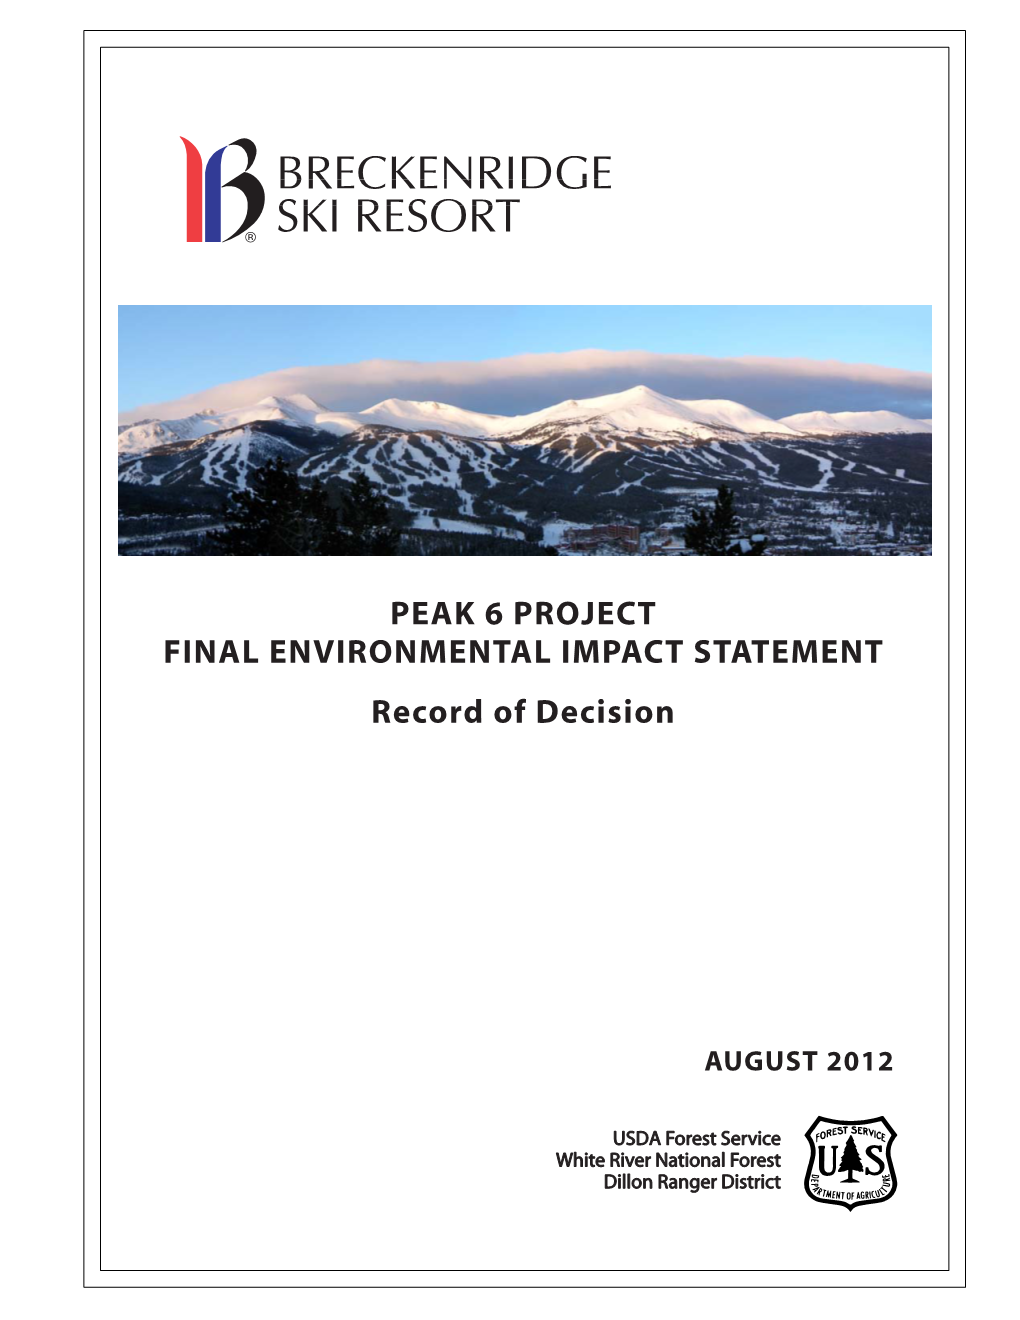 BRECKENRIDGE SKI RESORT PEAK 6 PROJECT FINAL ENVIRONMENTAL IMPACT STATEMENT RECORD of DECISION August 2012